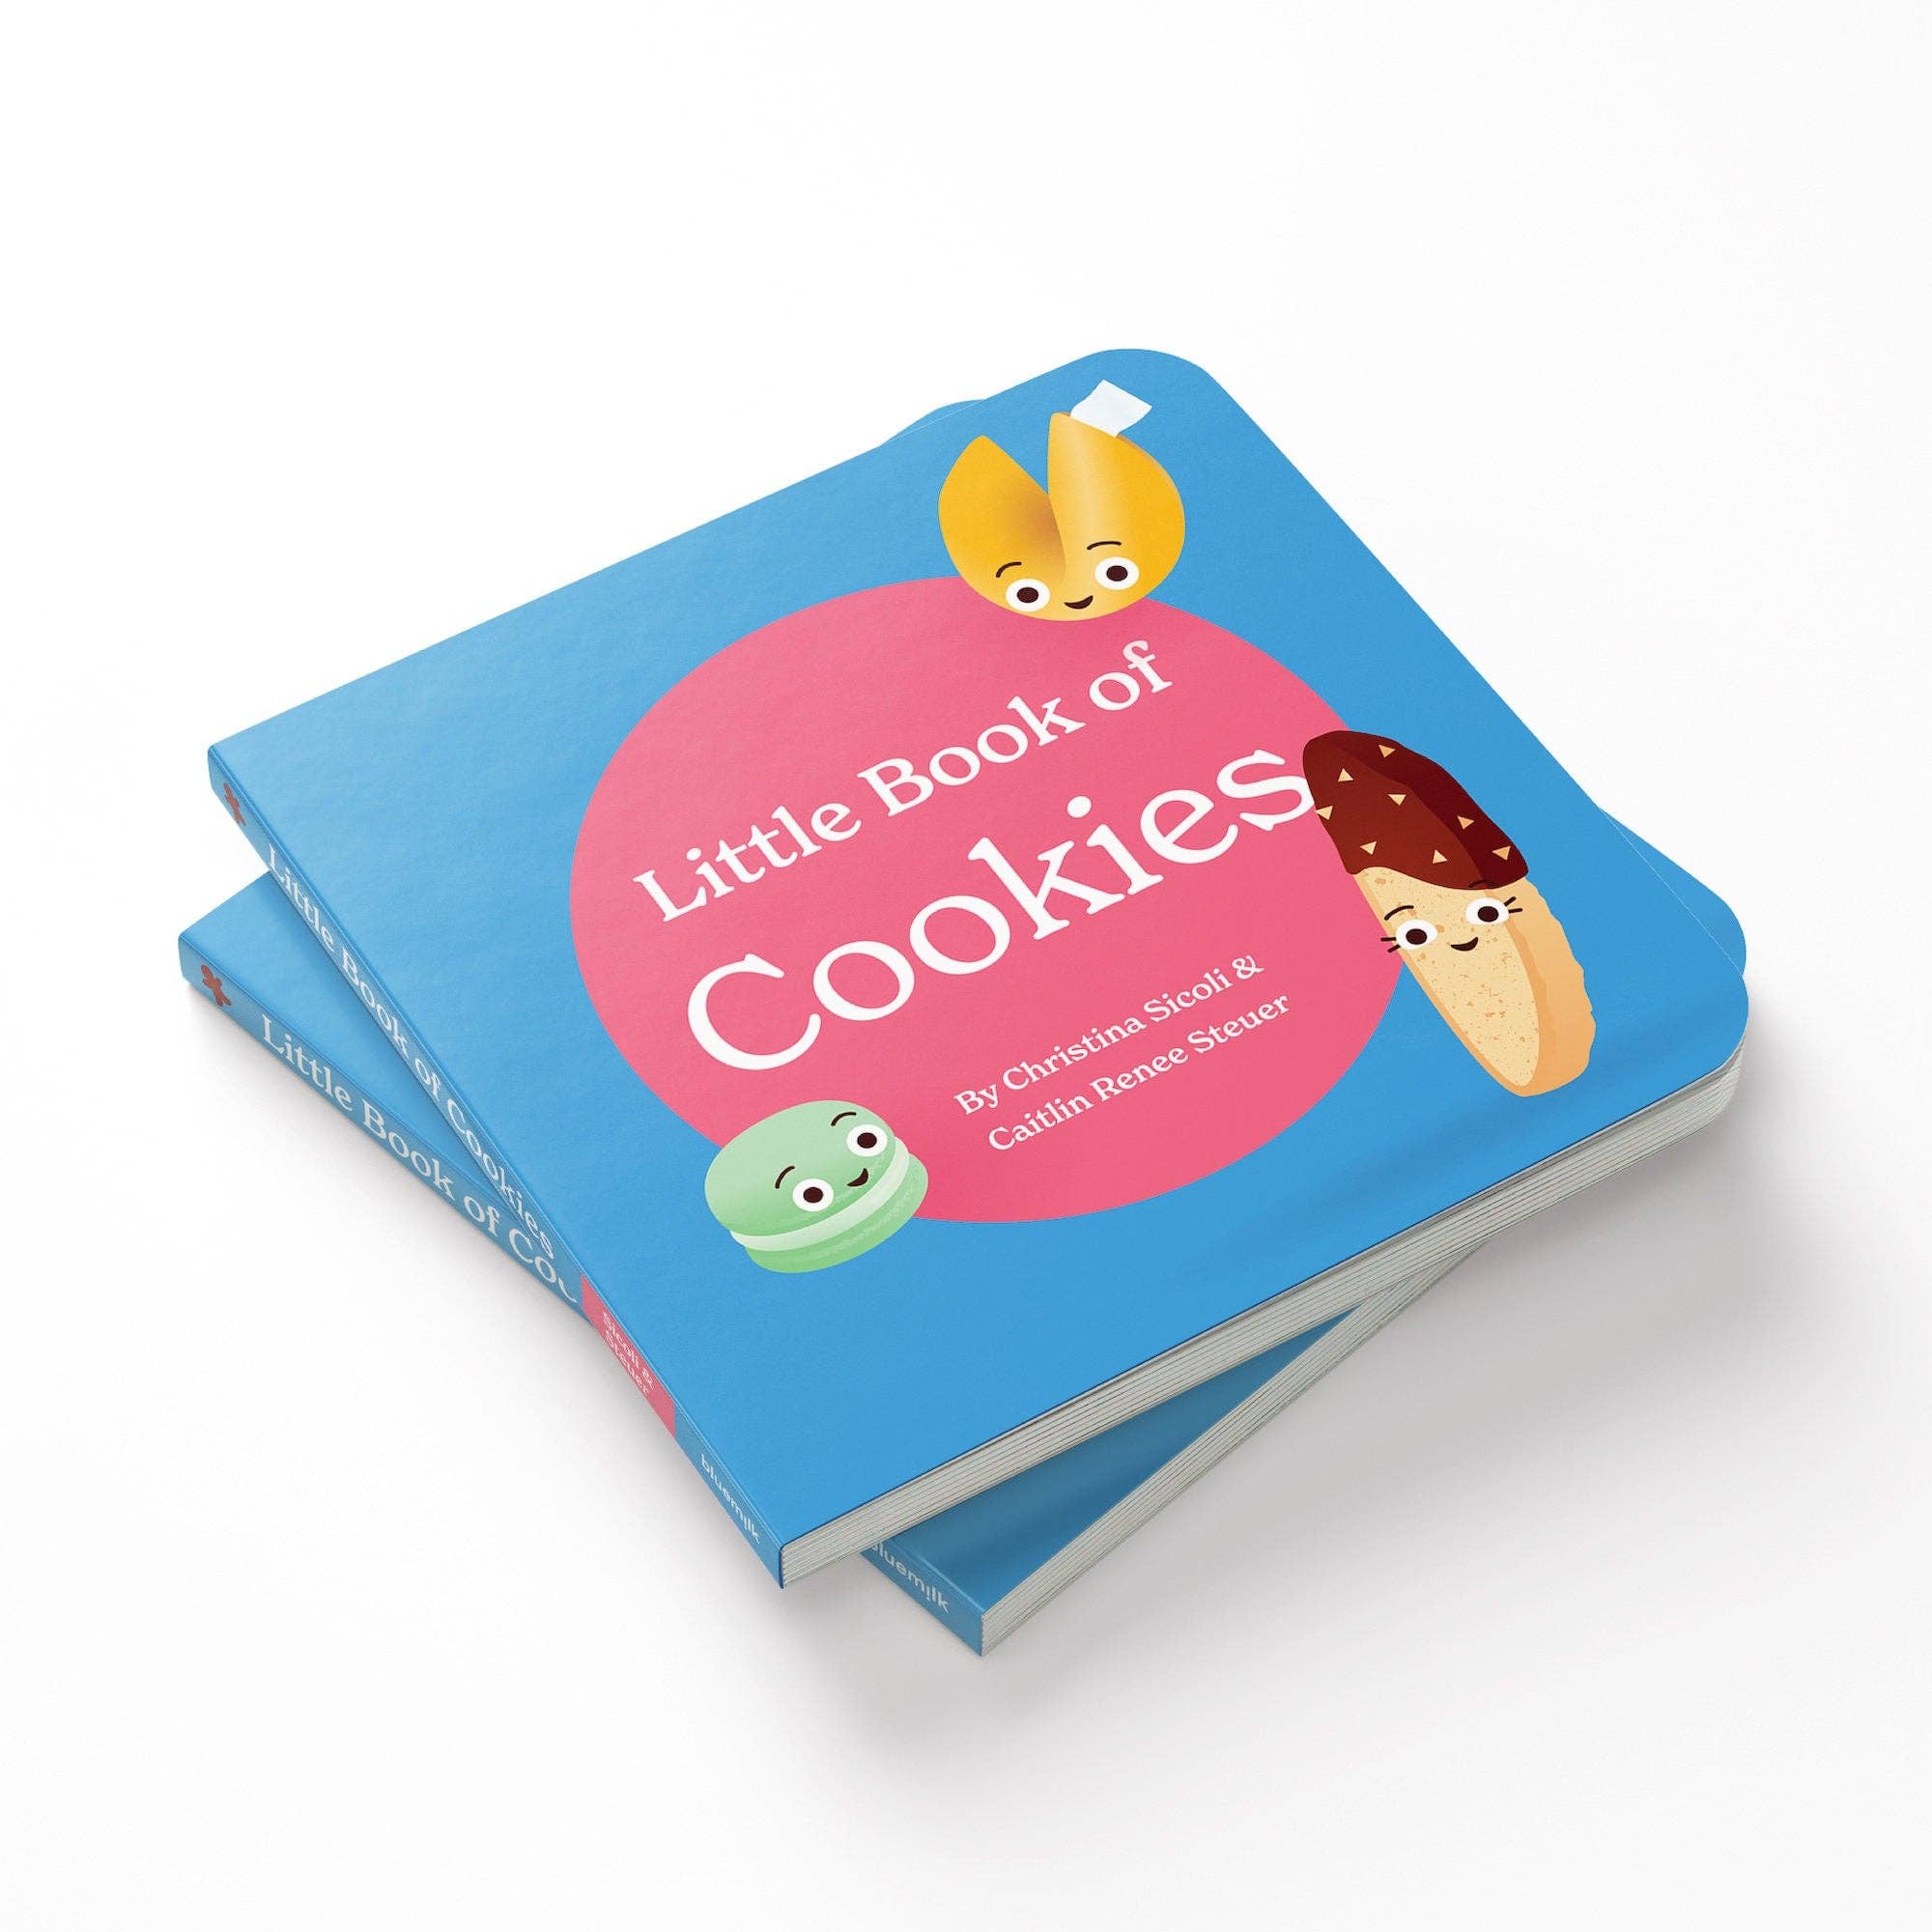 Little Book of Cookies by BlueMilk Studio